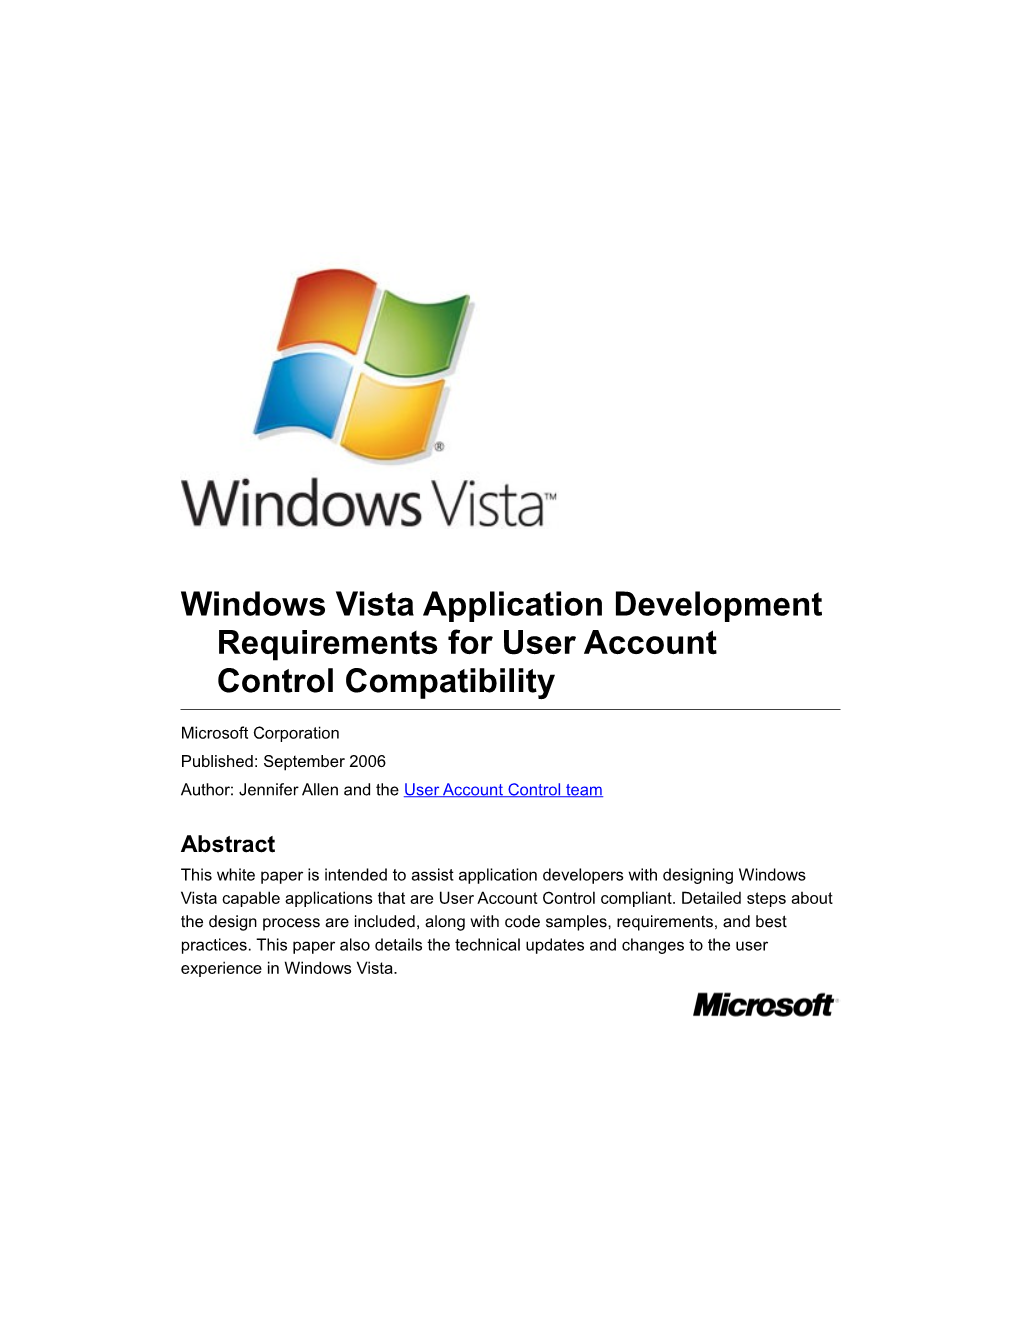 Windows Vista Application Development Requirements for User Account Control Compatibility